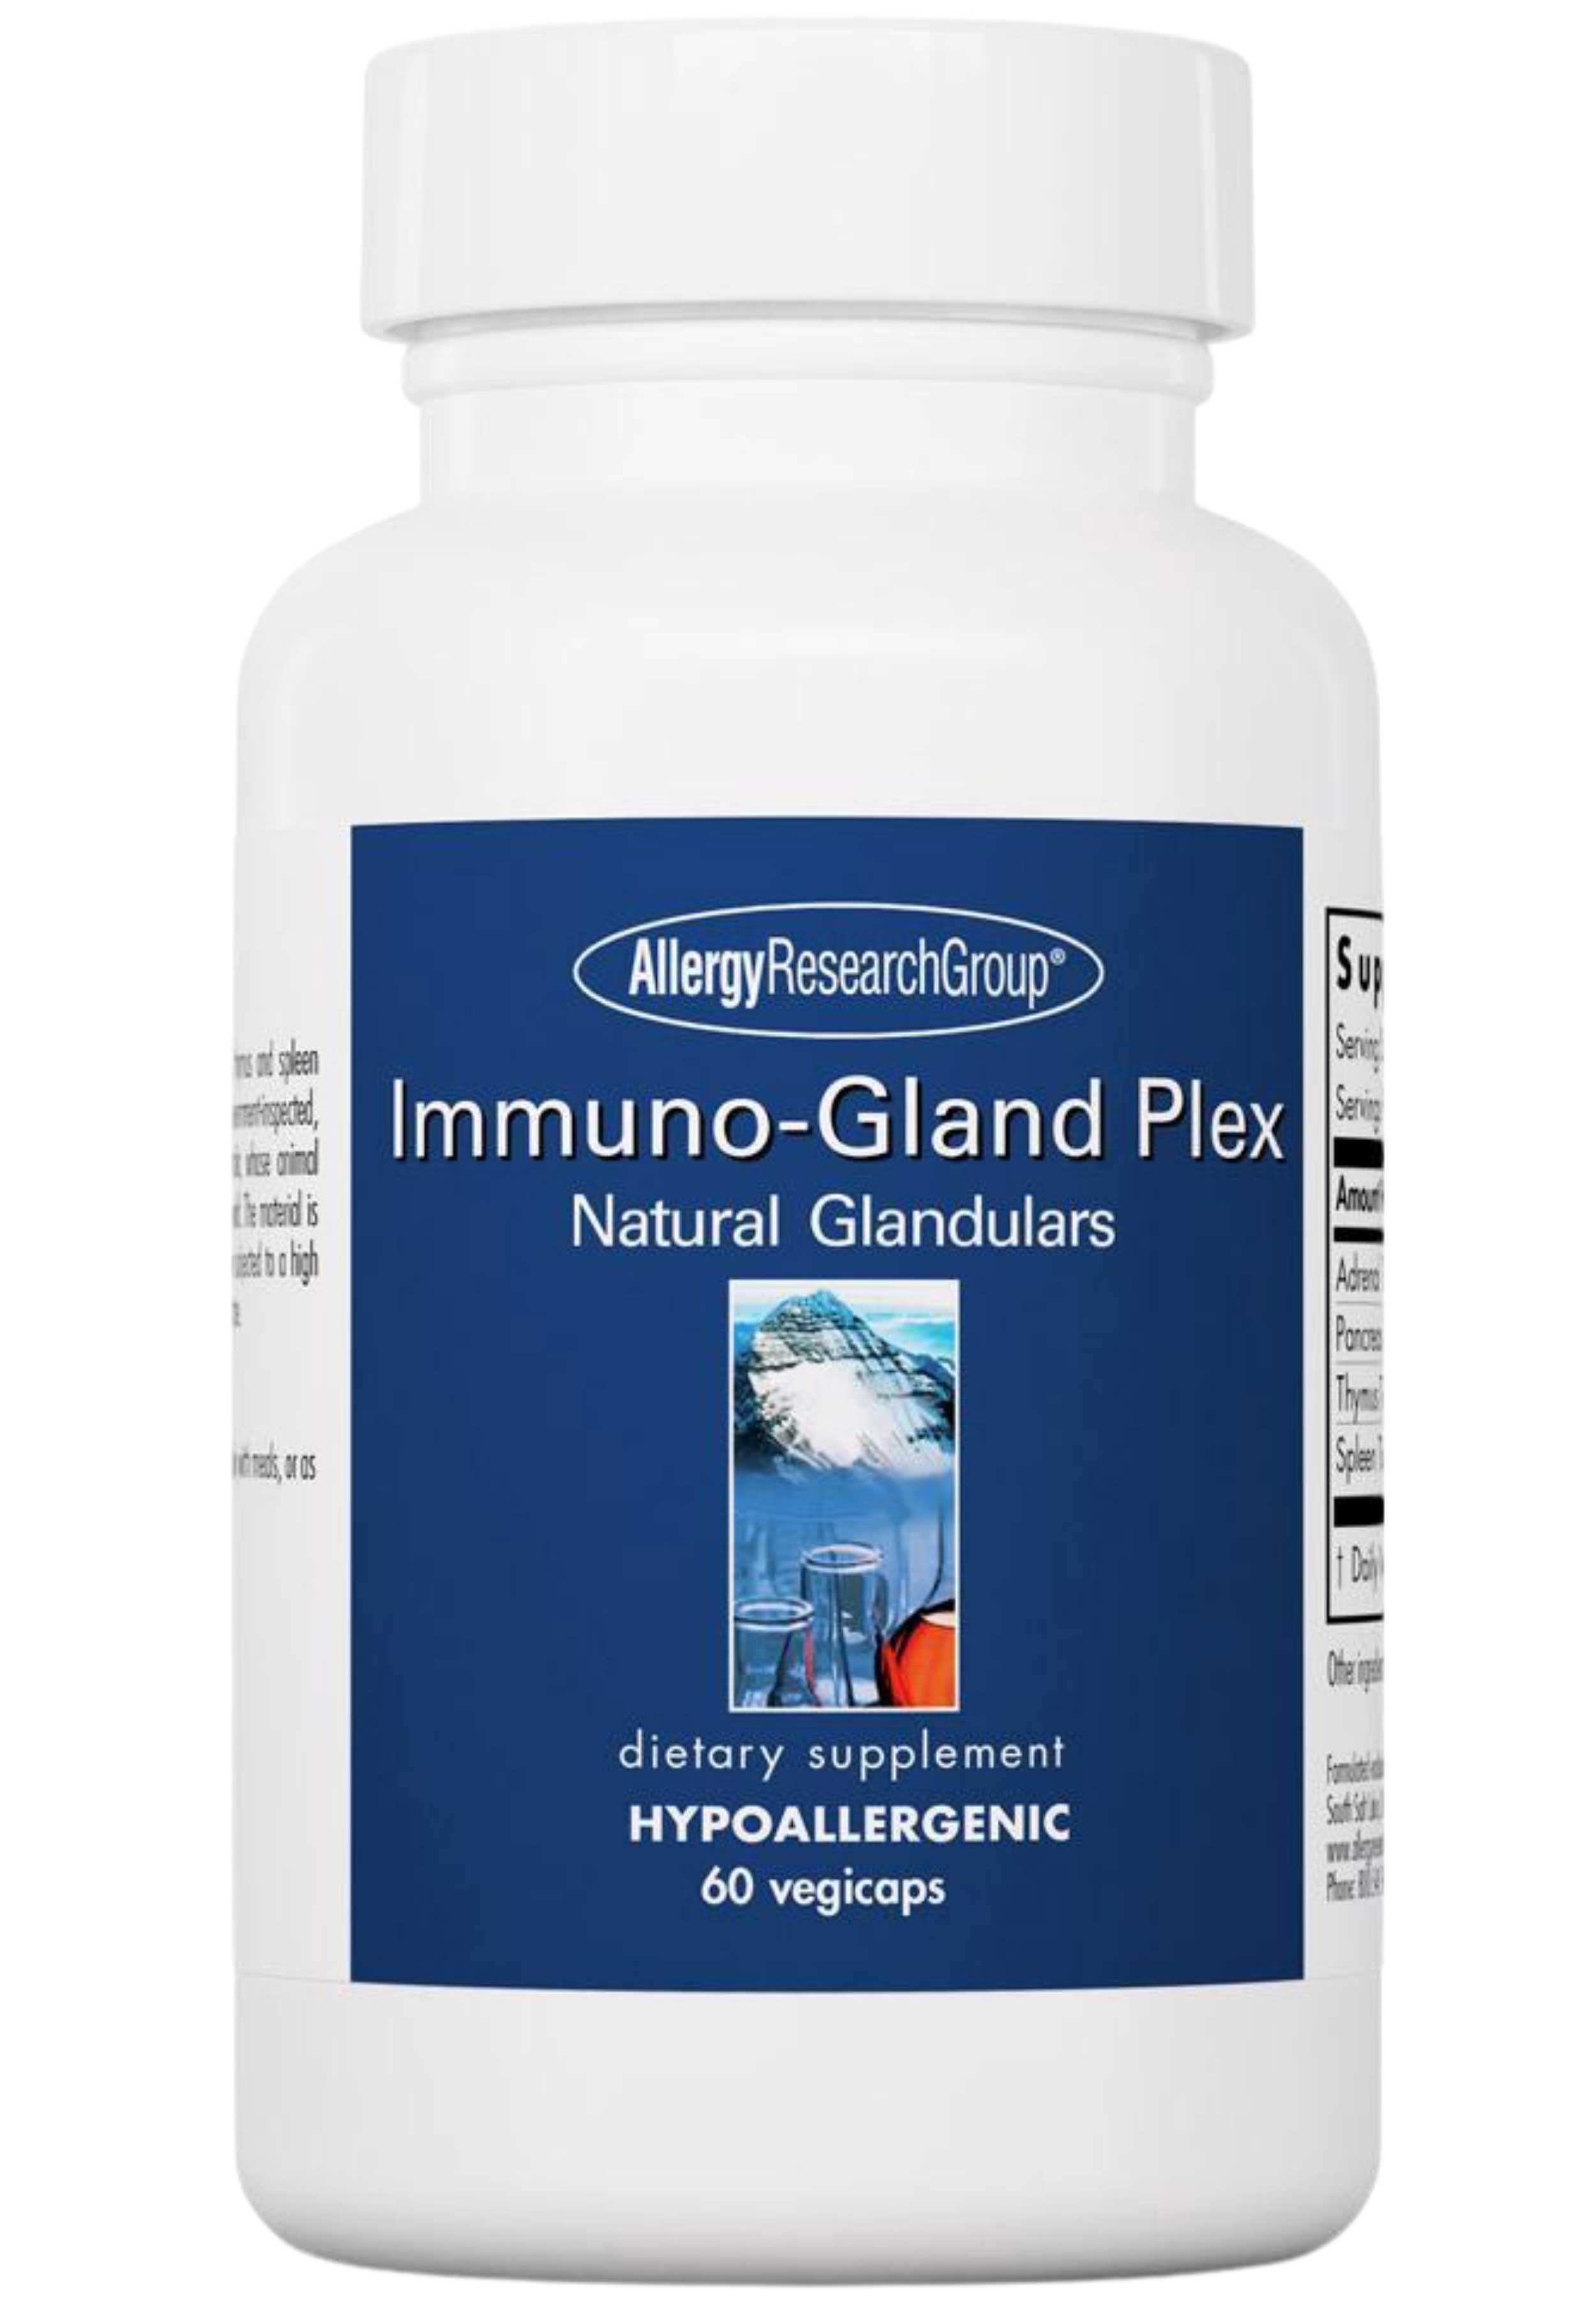 Allergy Research Group Immuno-Gland Plex